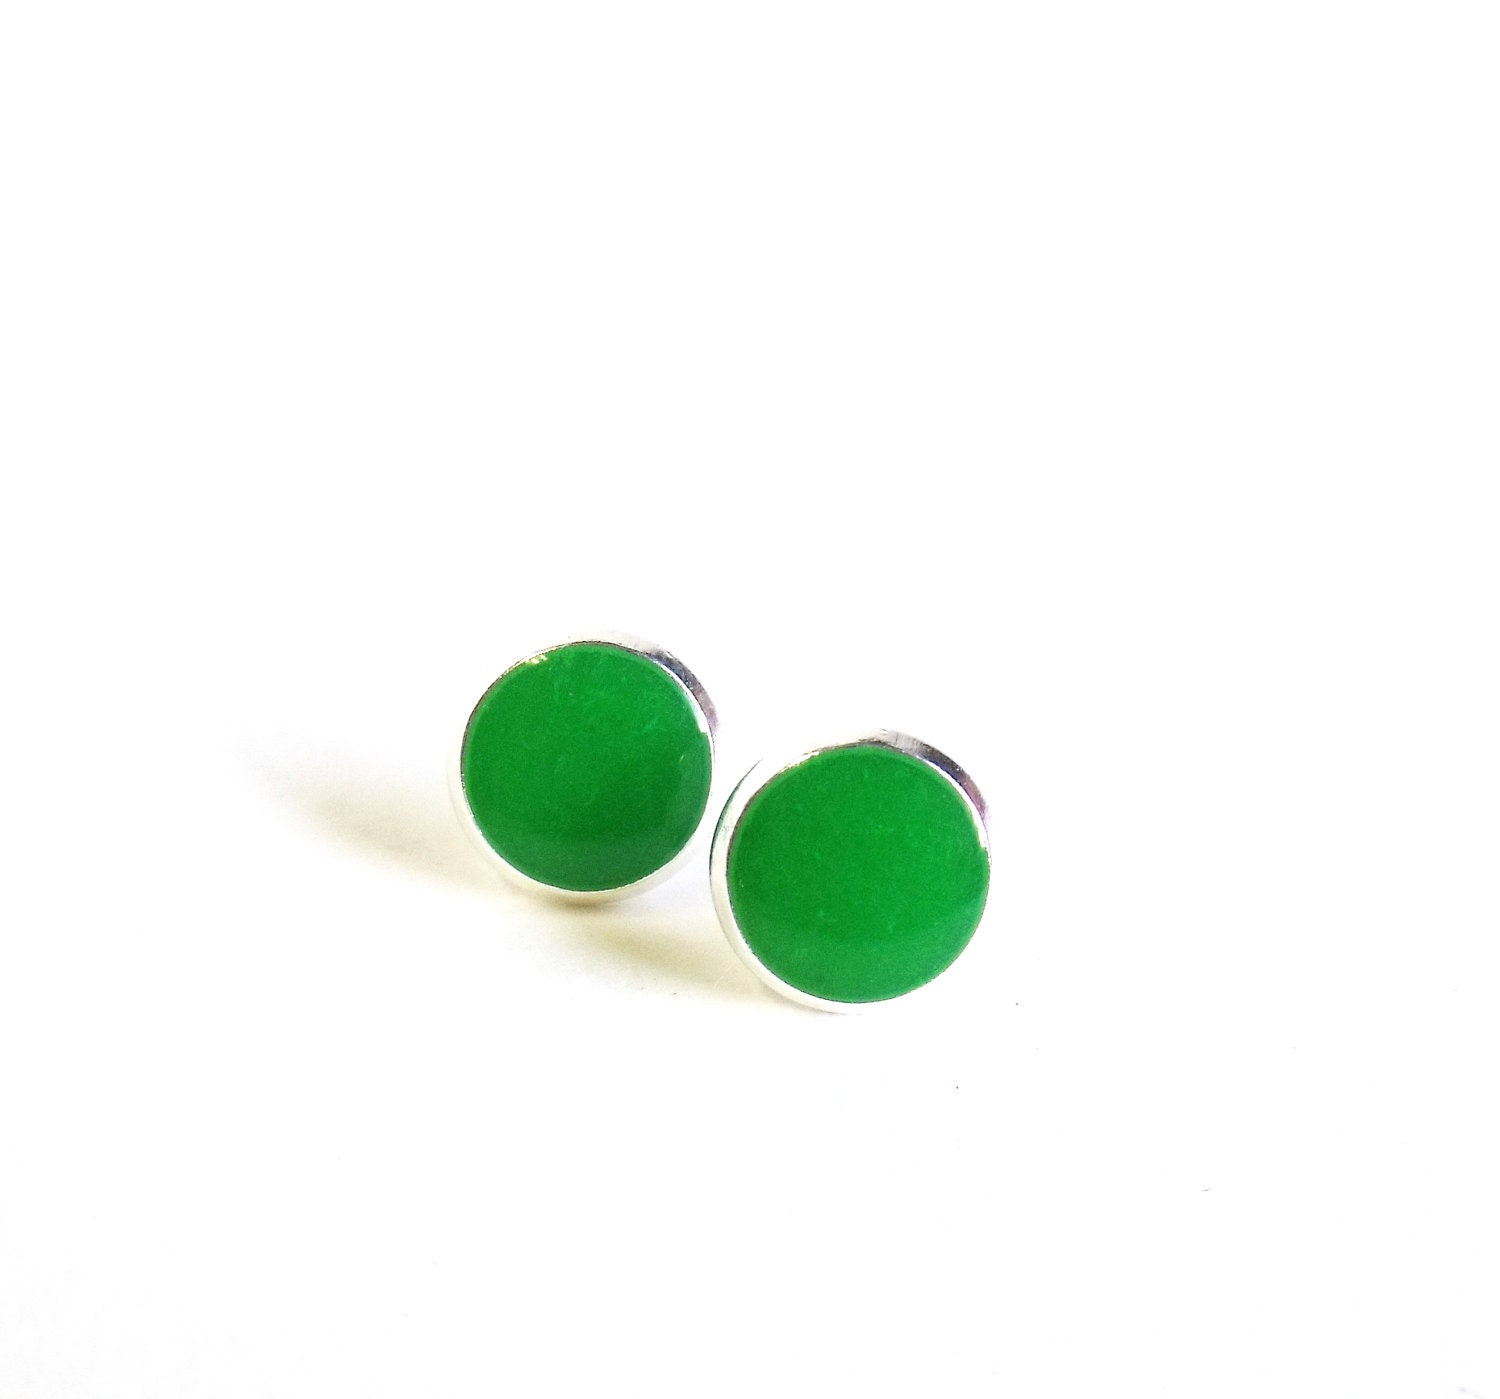 Tiny earring studs grass green stud earrings - agatechristina